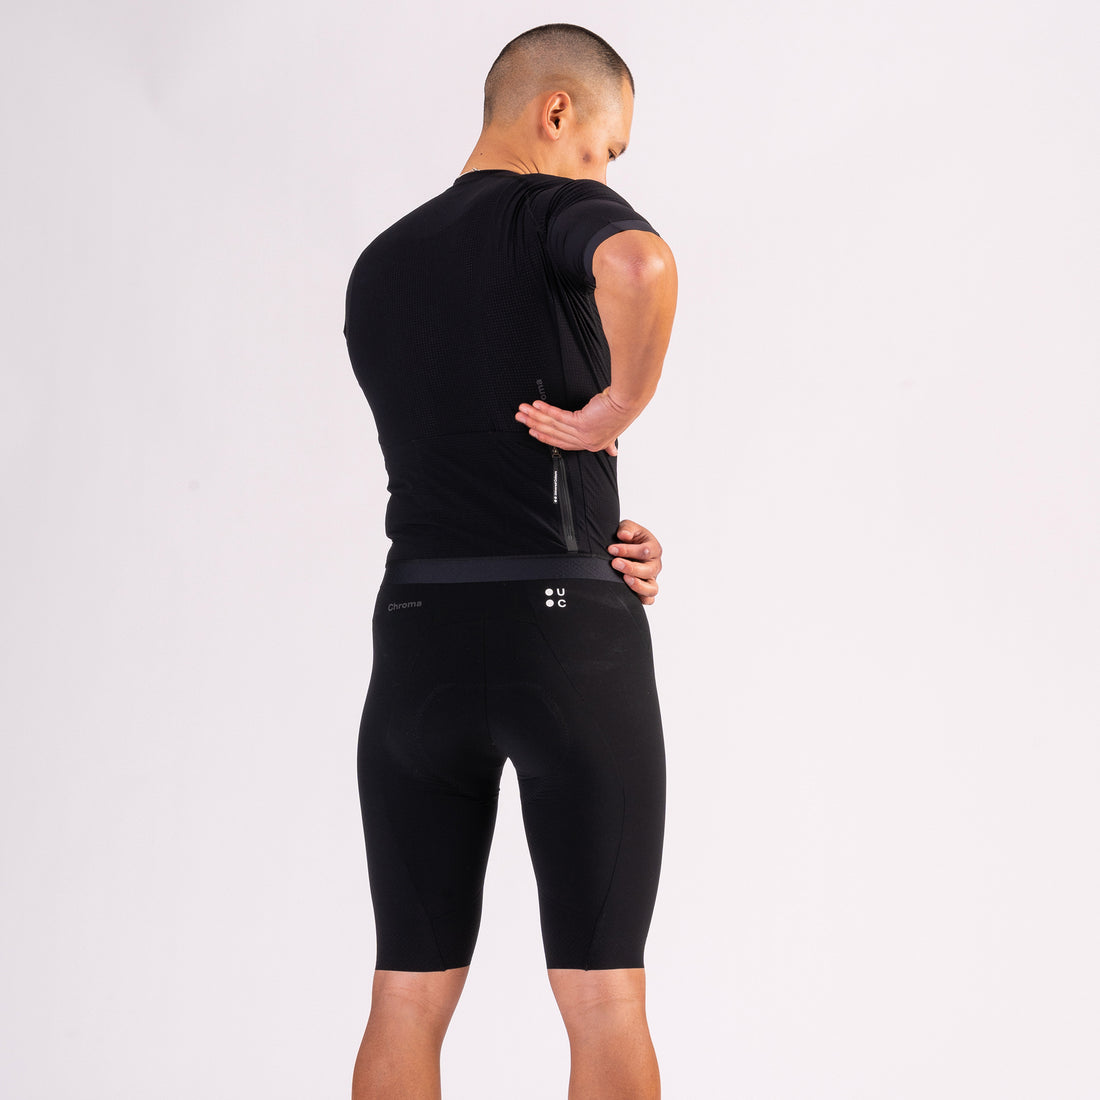 Universal Colours Chroma Men's Short Sleeve Jersey Radtrikot Black